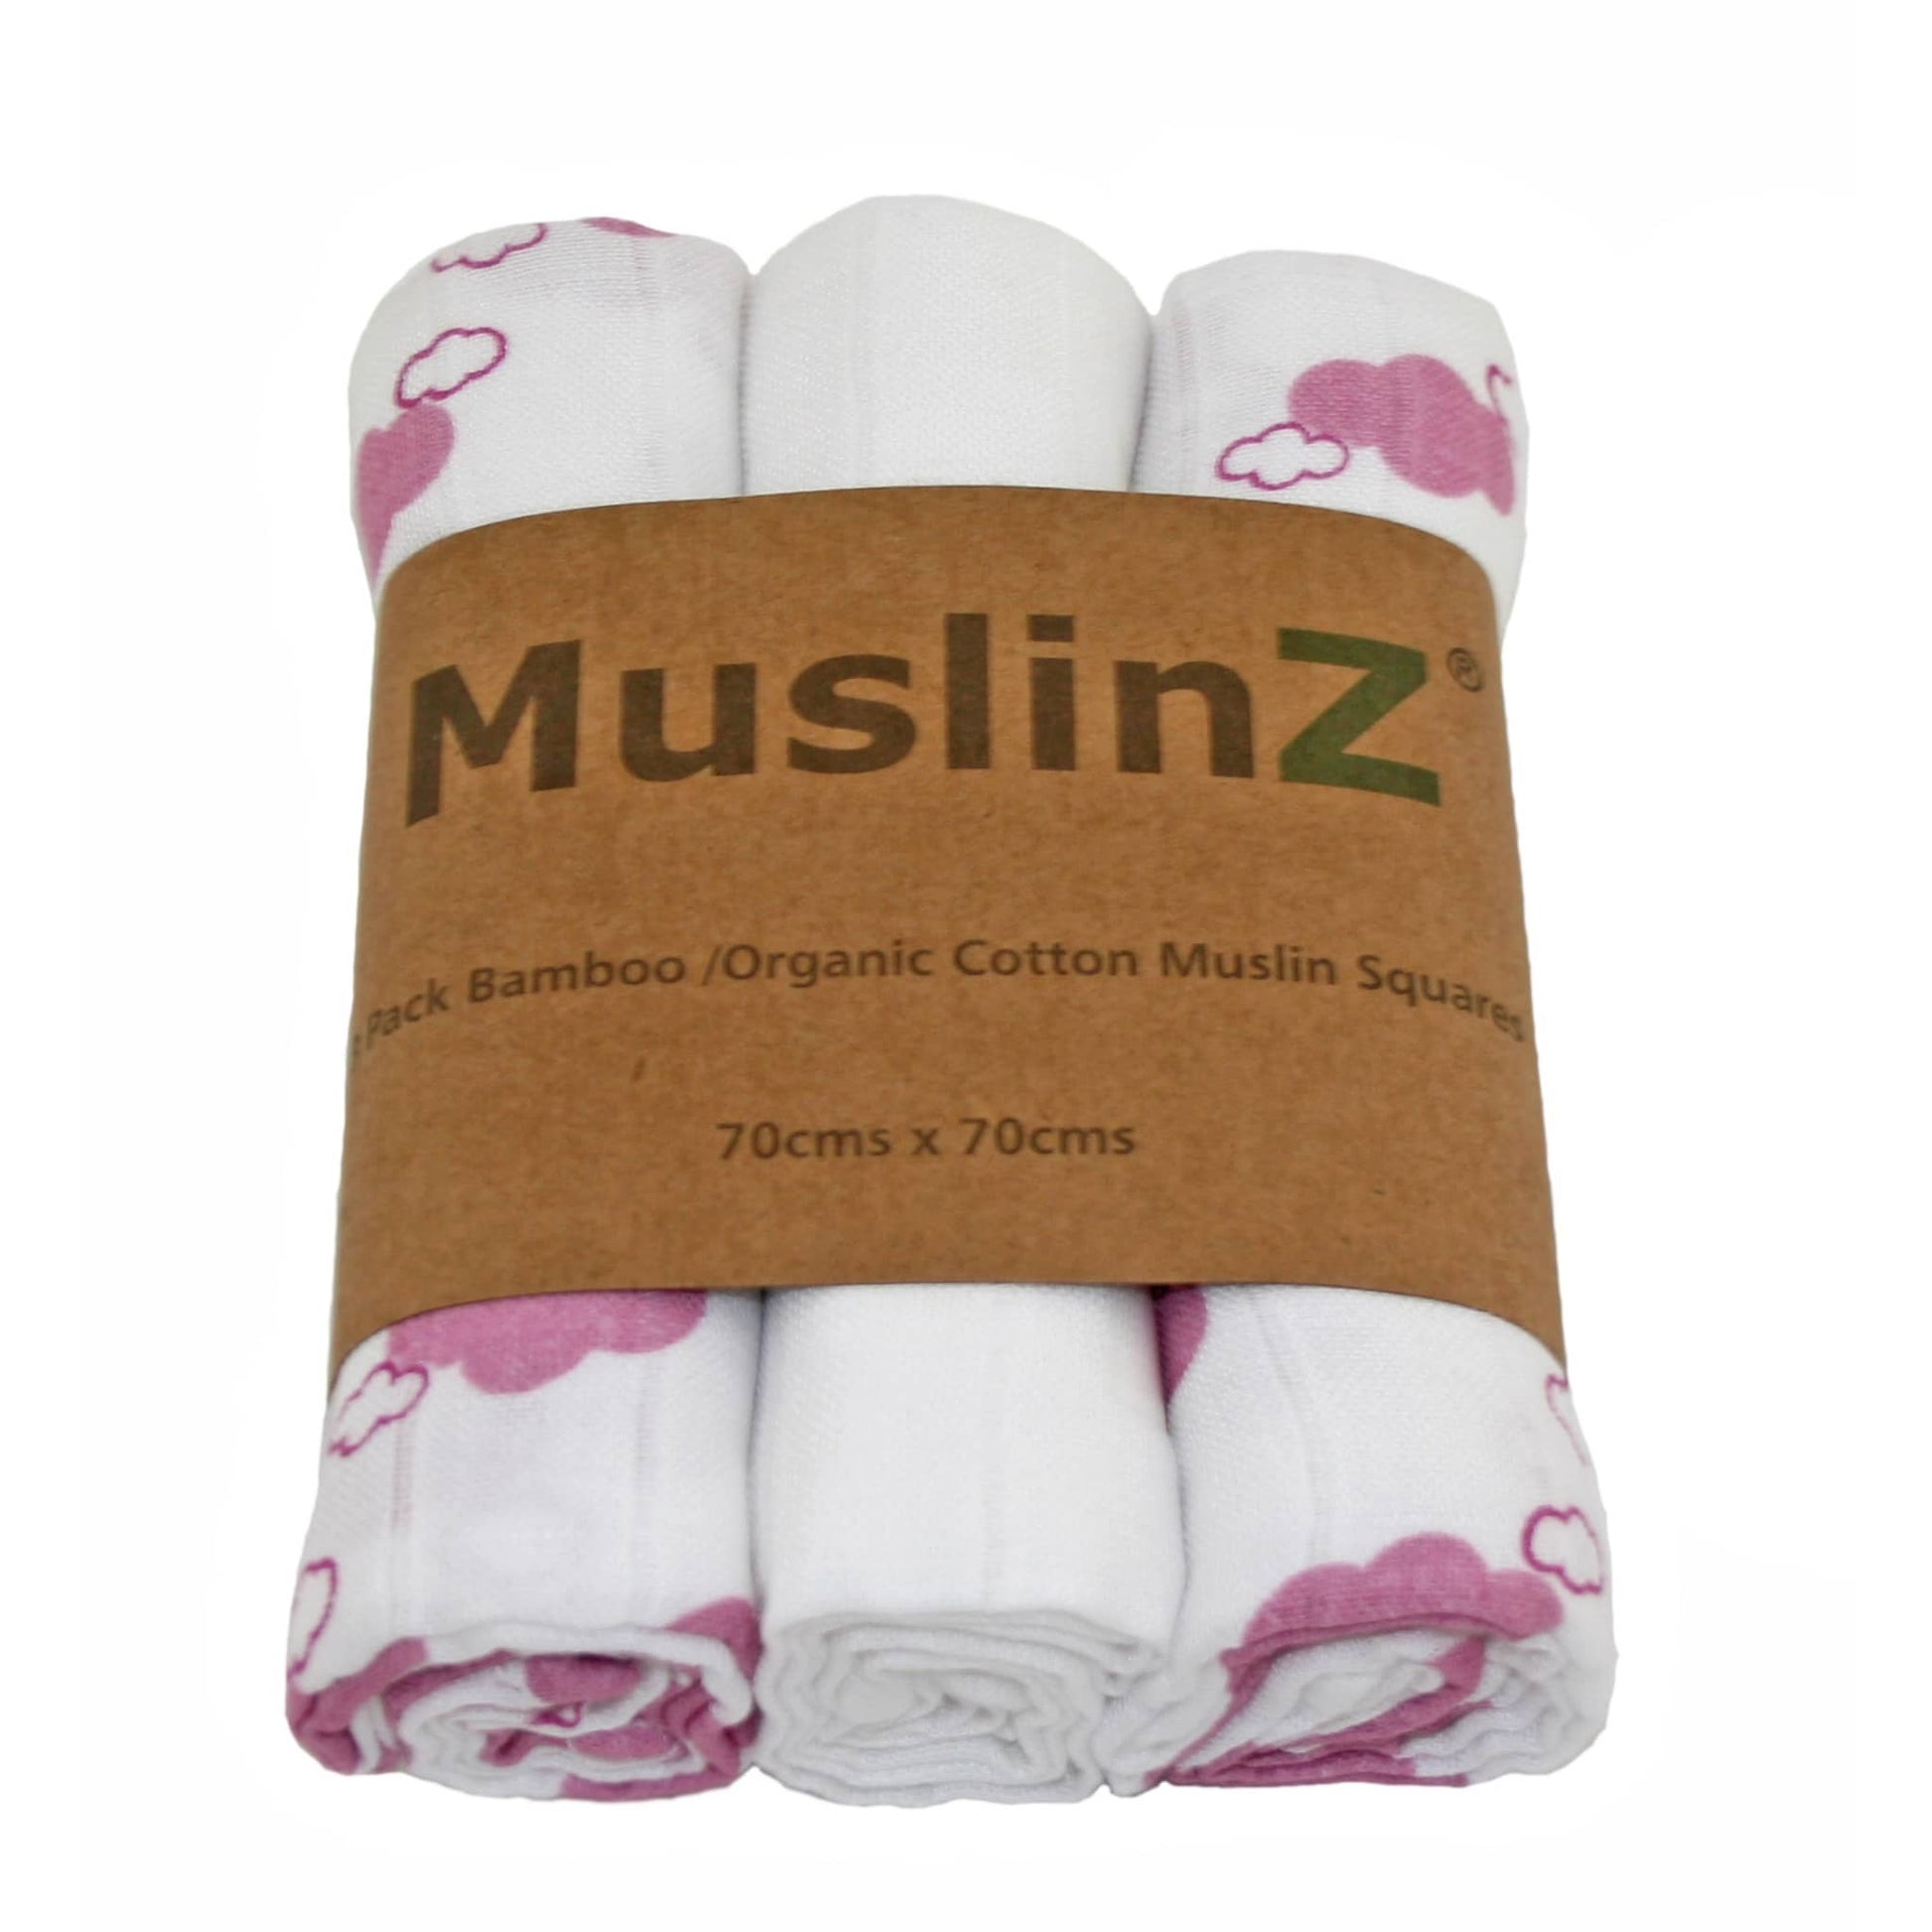 MuslinZ Bamboo/Organic Cotton Muslin Square Pink Cloud